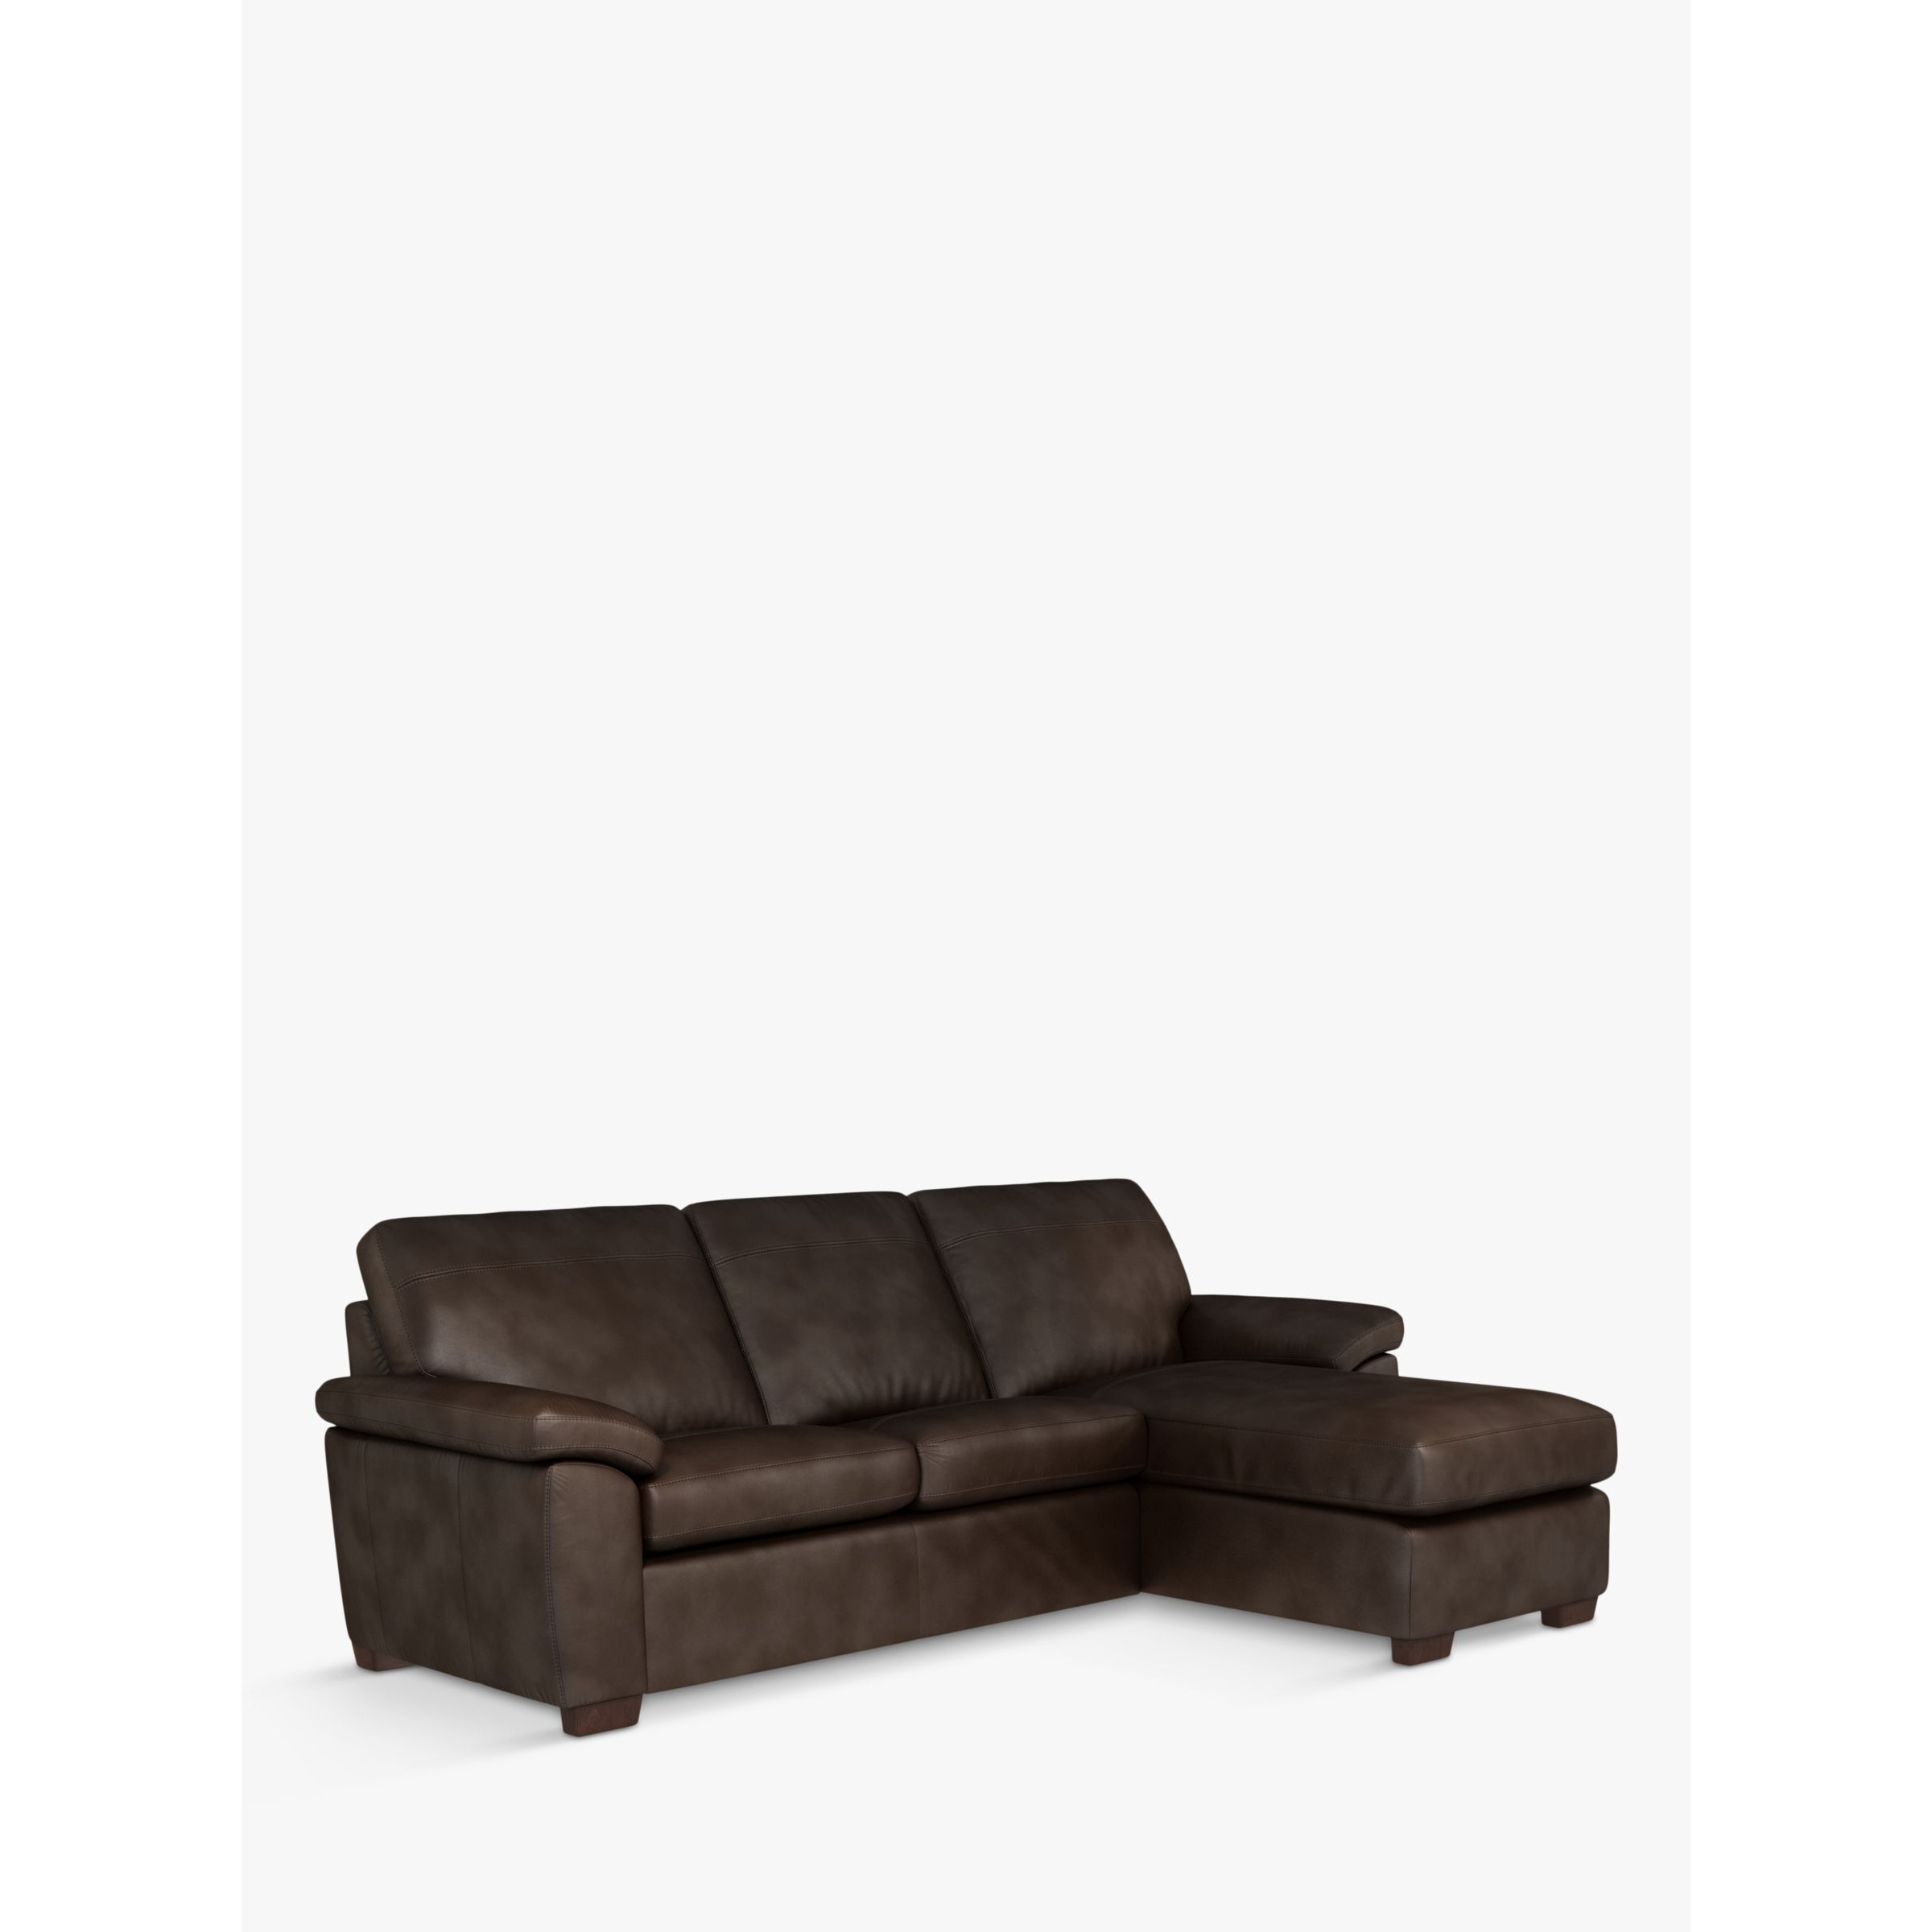 John Lewis Camden RHF Storage Chaise End Leather Sofa Bed, Dark Leg - image 1